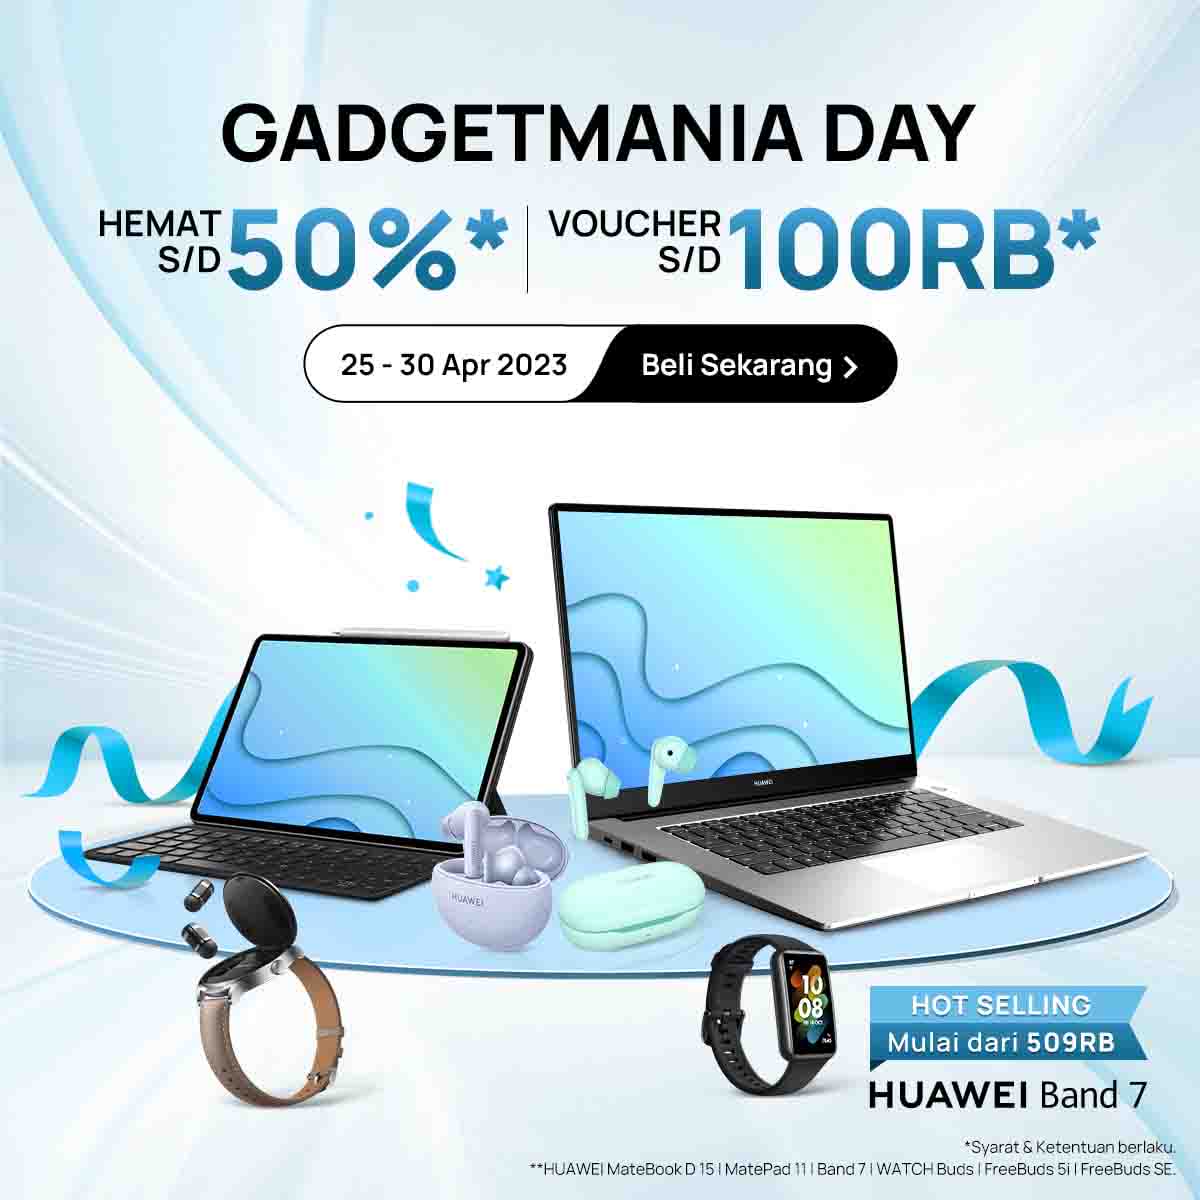 Huawei Indonesia GADGETMANIA